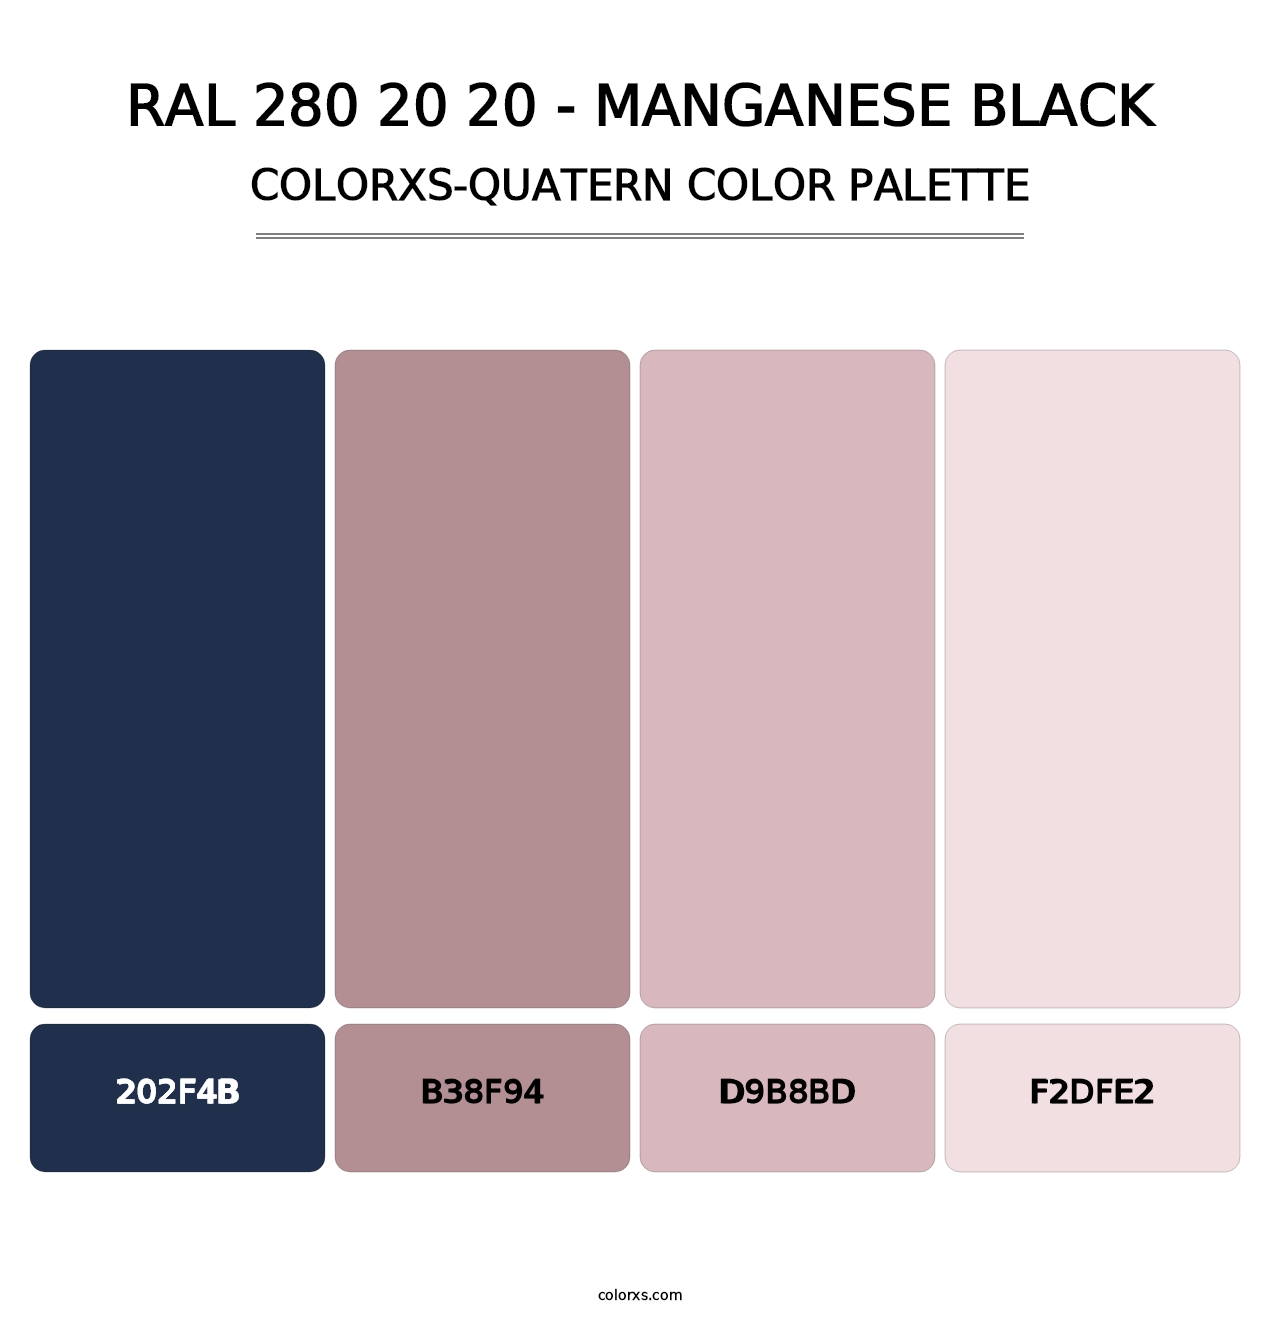 RAL 280 20 20 - Manganese Black - Colorxs Quatern Palette